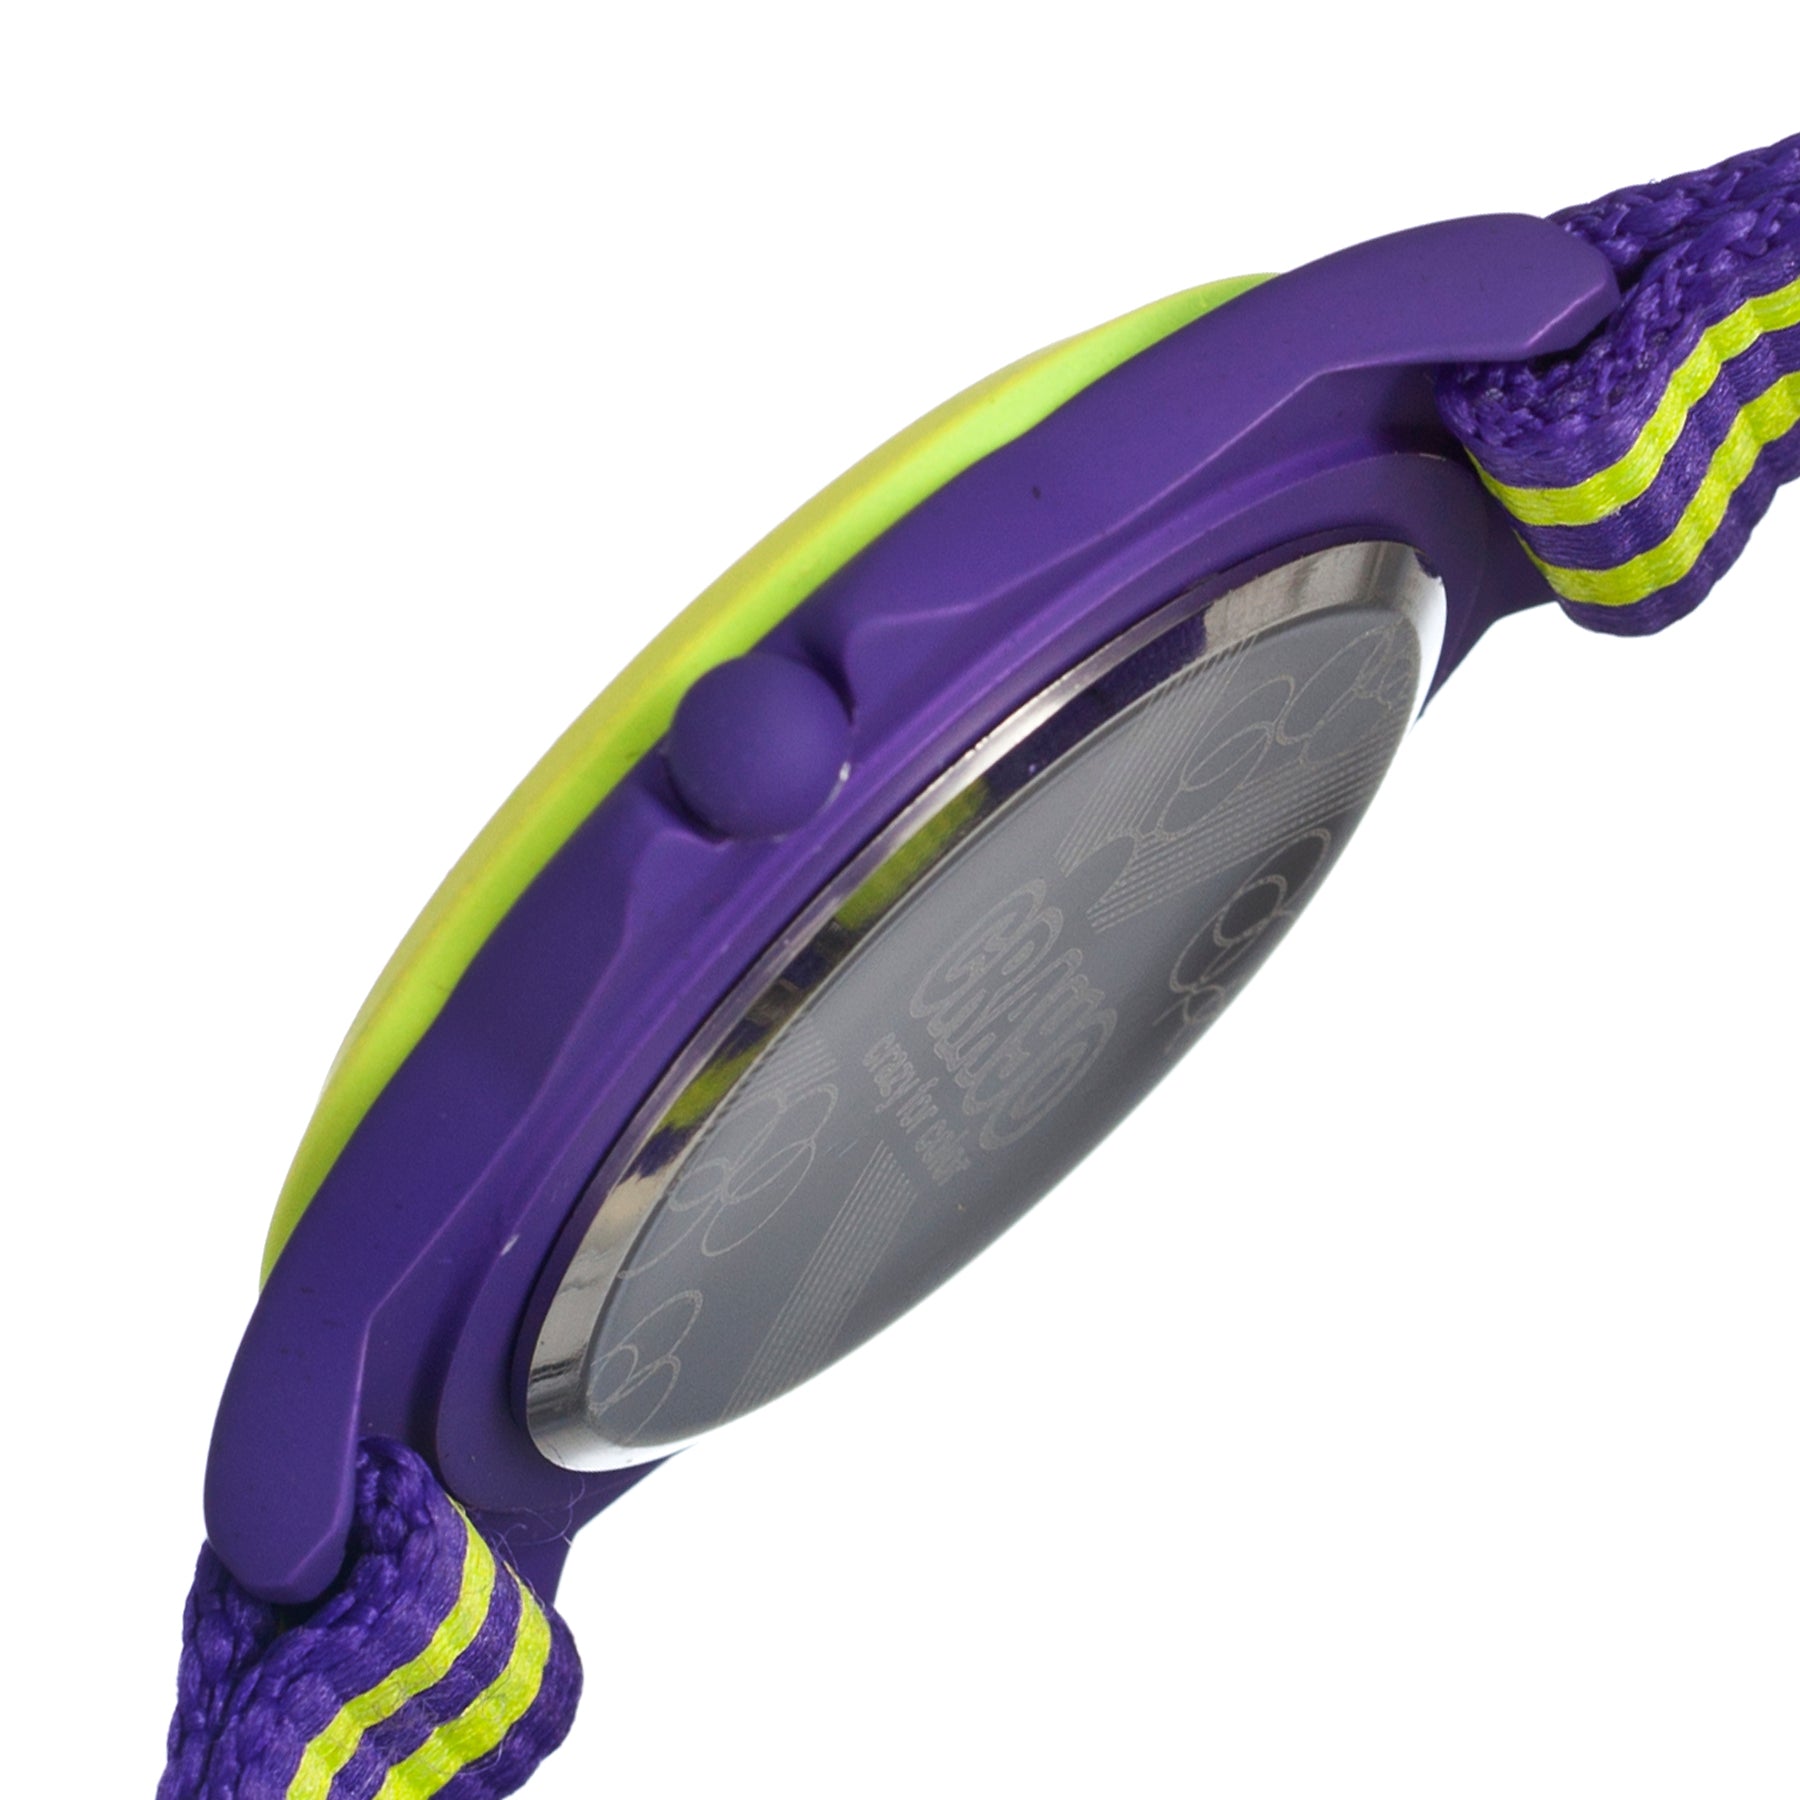 Crayo Carnival Nylon-Band Unisex Watch w/Date - Purple/Lime - CRACR0702